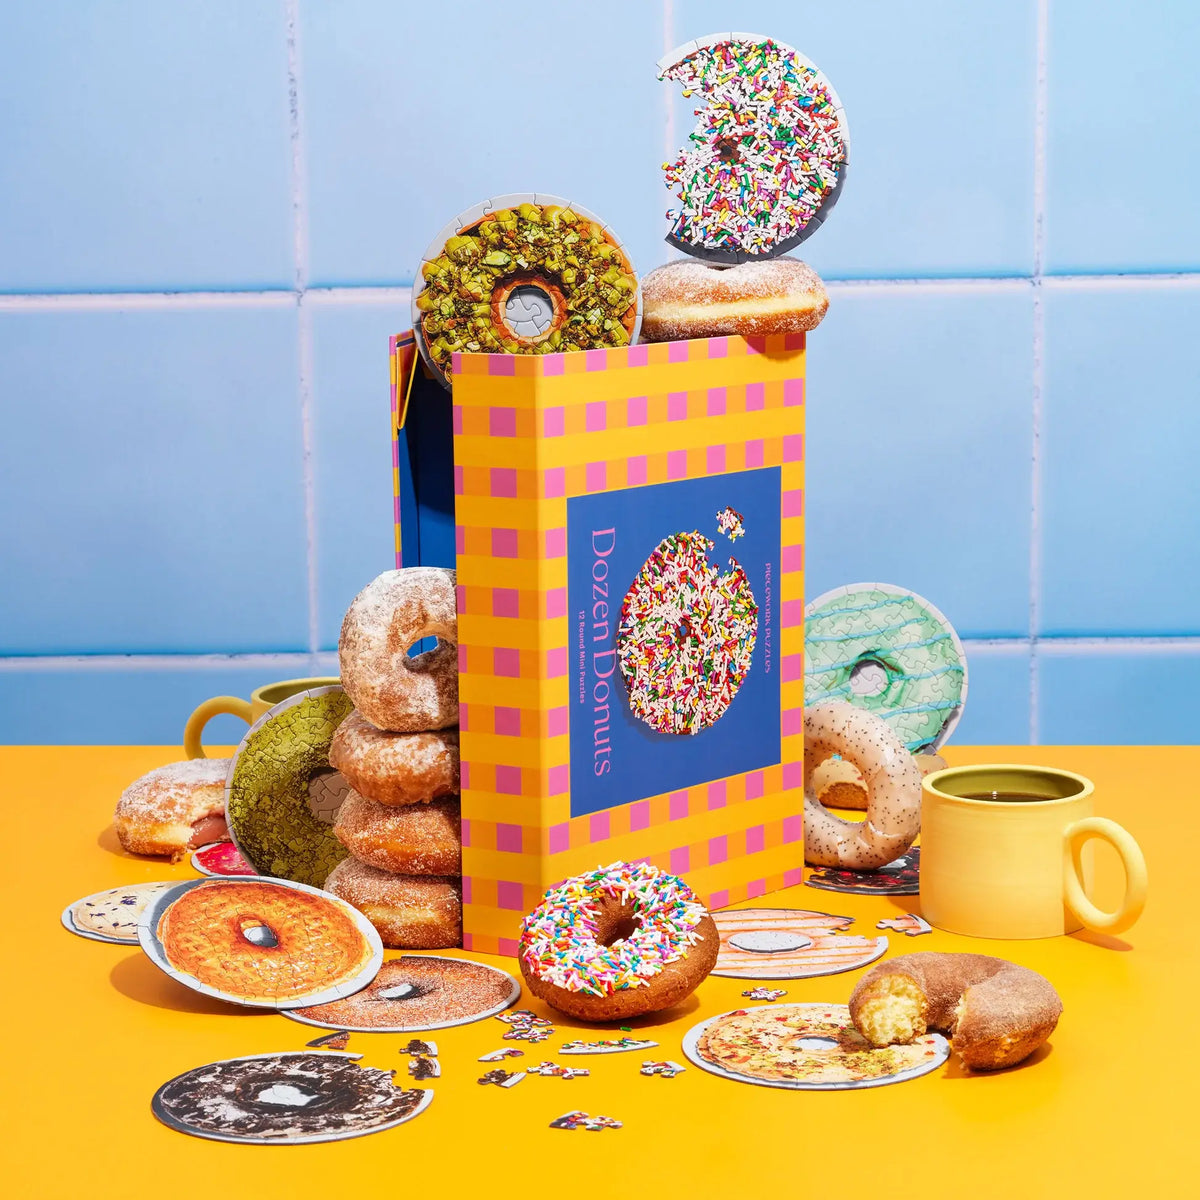 Mini Puzzles | Dozen Donuts ✨NEW✨  | Piecework Puzzles